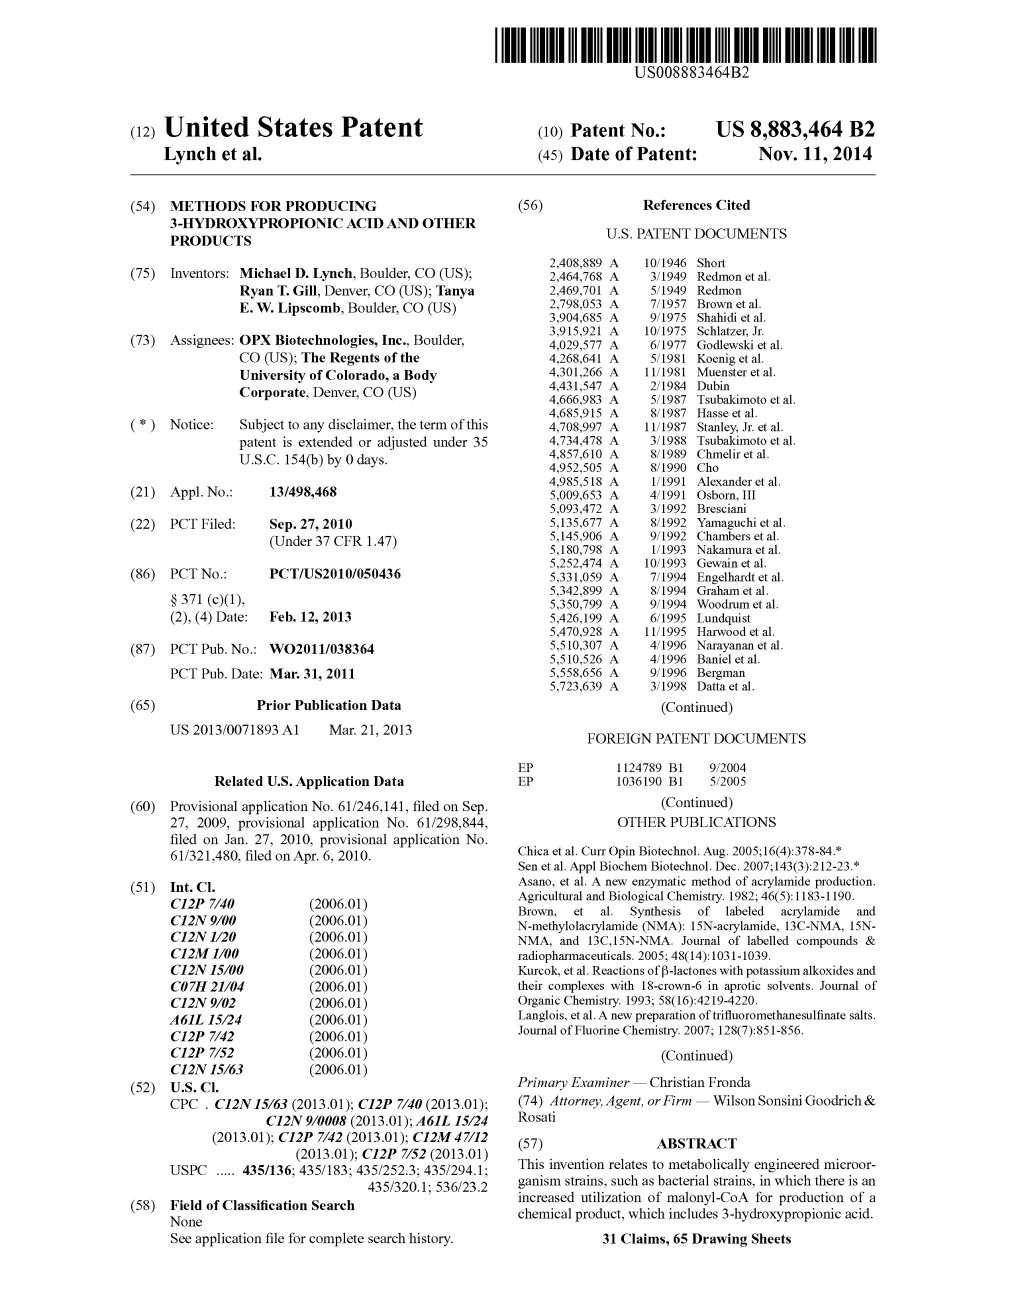 (12) United States Patent (10) Patent No.: US 8,883,464 B2 Lynch Et Al